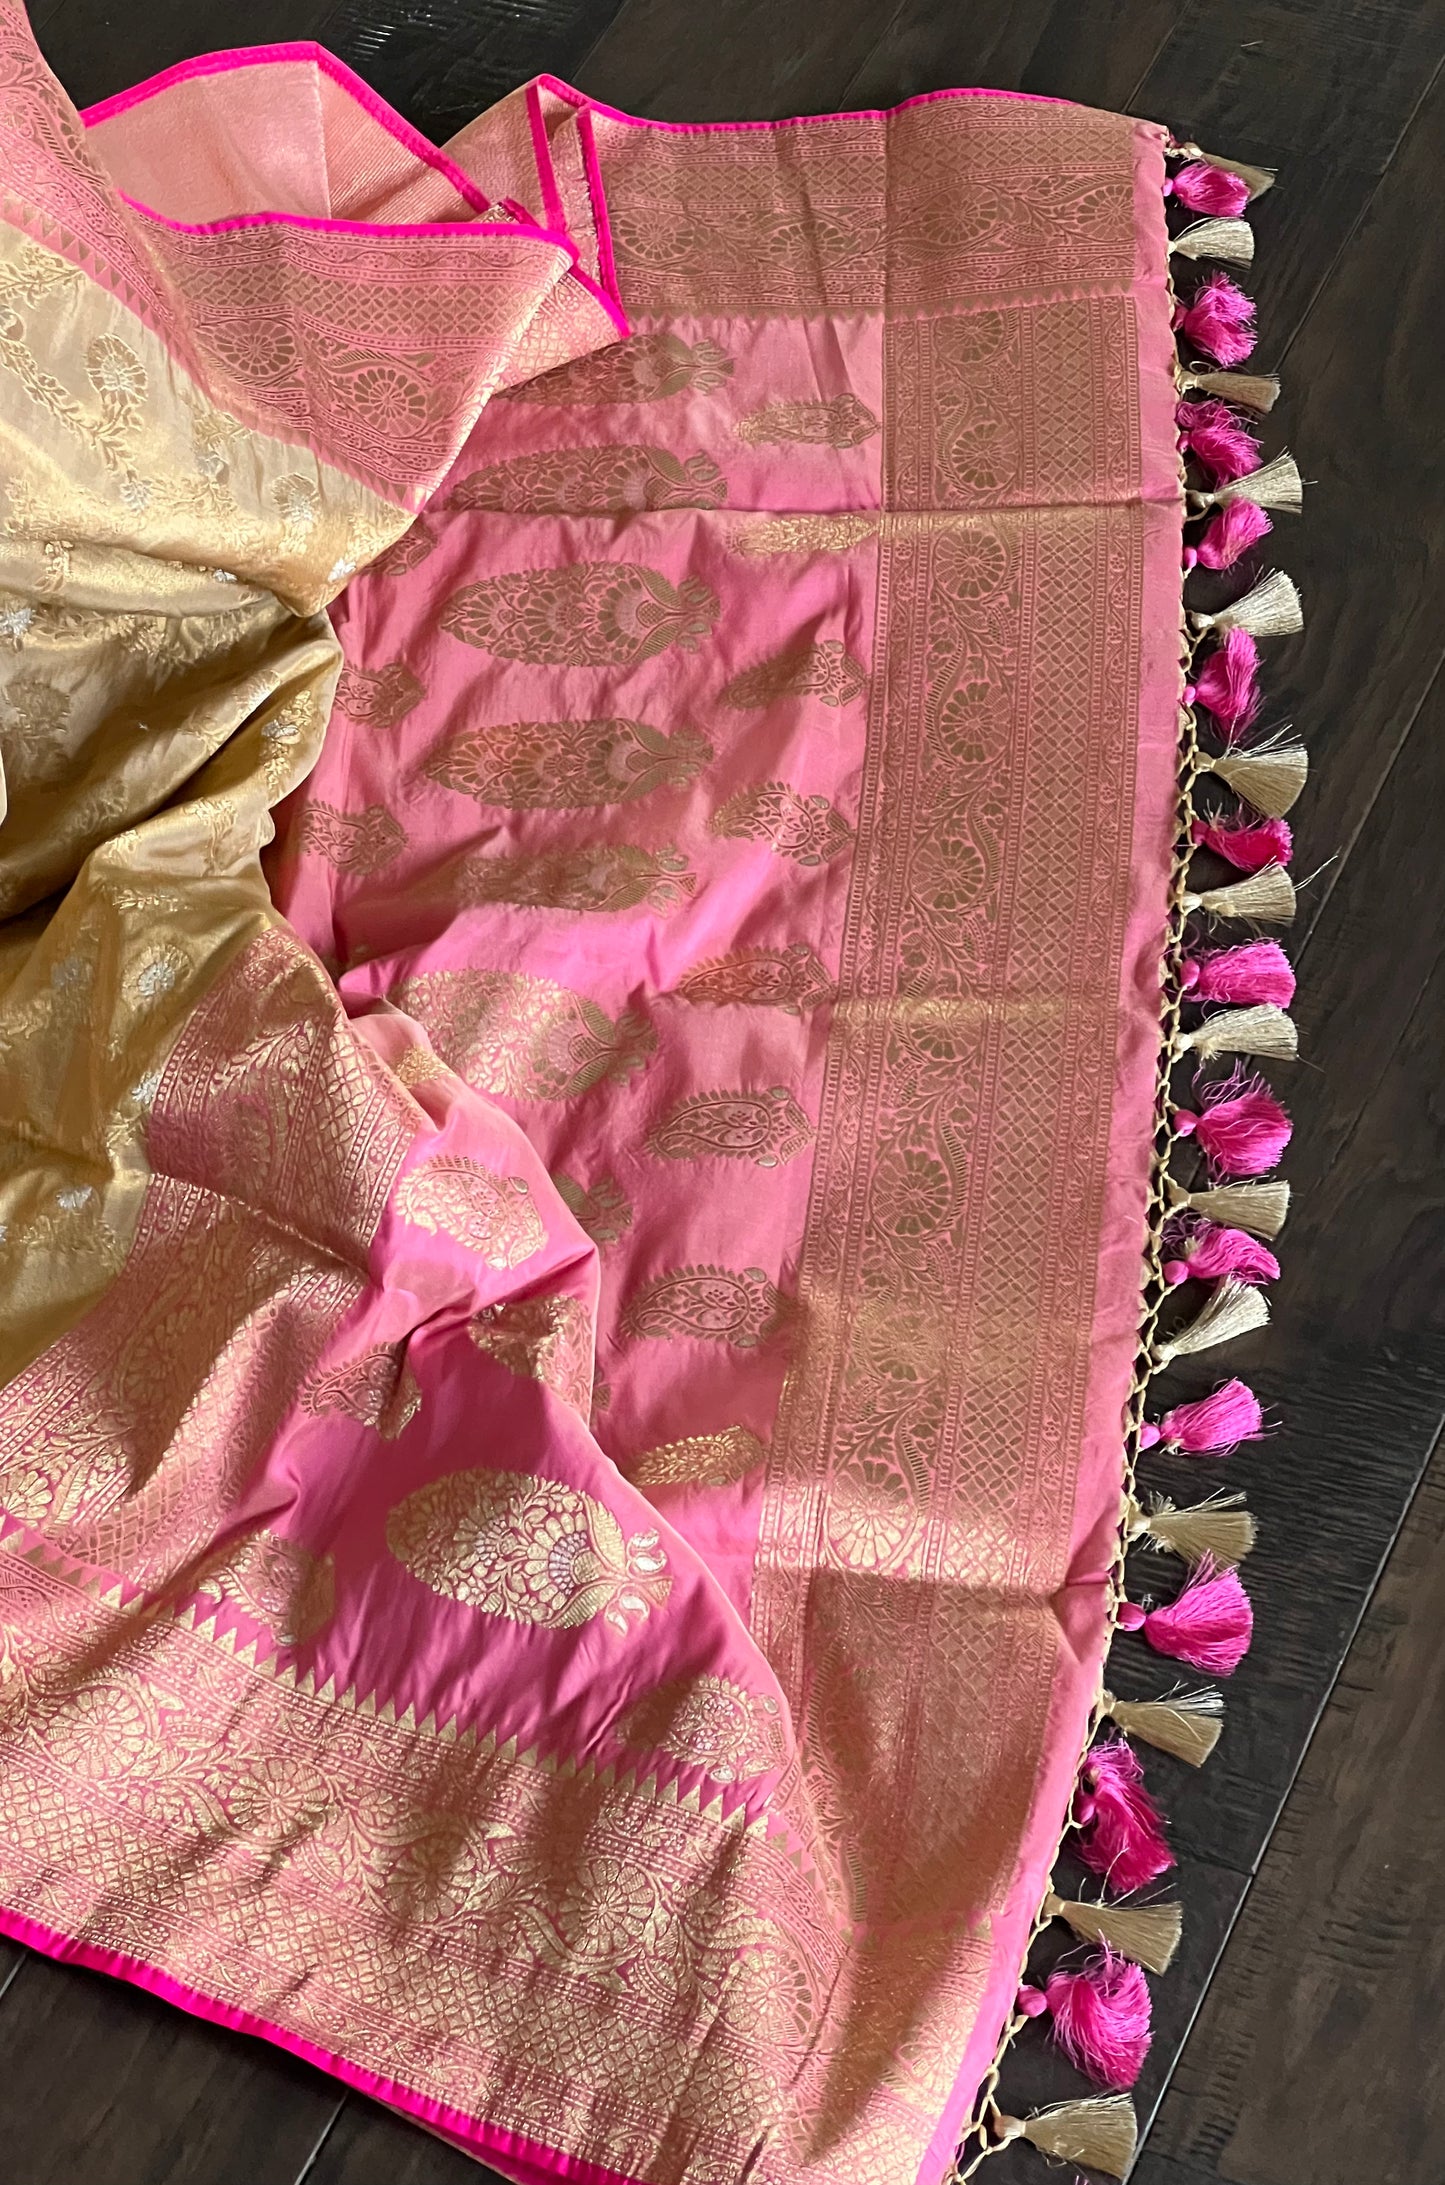 Soft Silk Banarasi - Golden Tan Beige Pink Antique Golden Zari